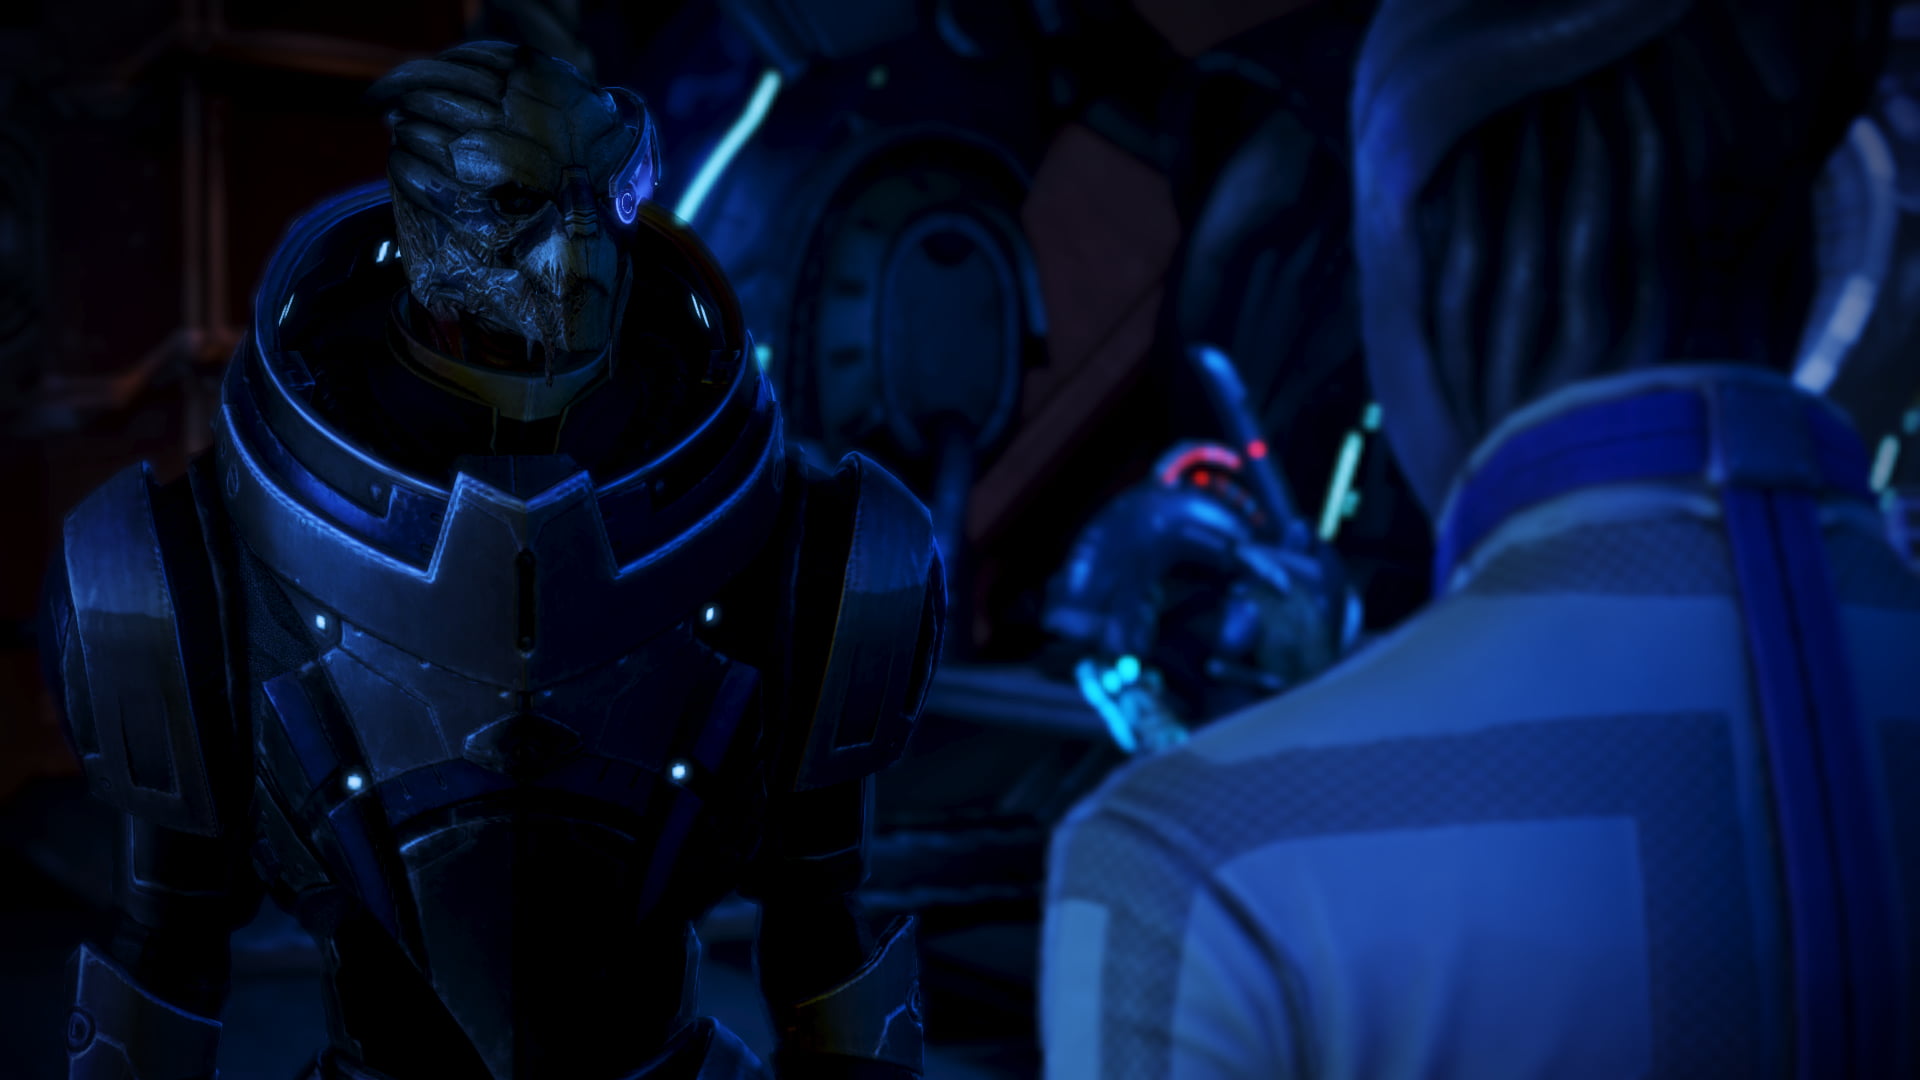 gray costume wallpaper, Mass Effect, Garrus Vakarian, Liara T'Soni, video games